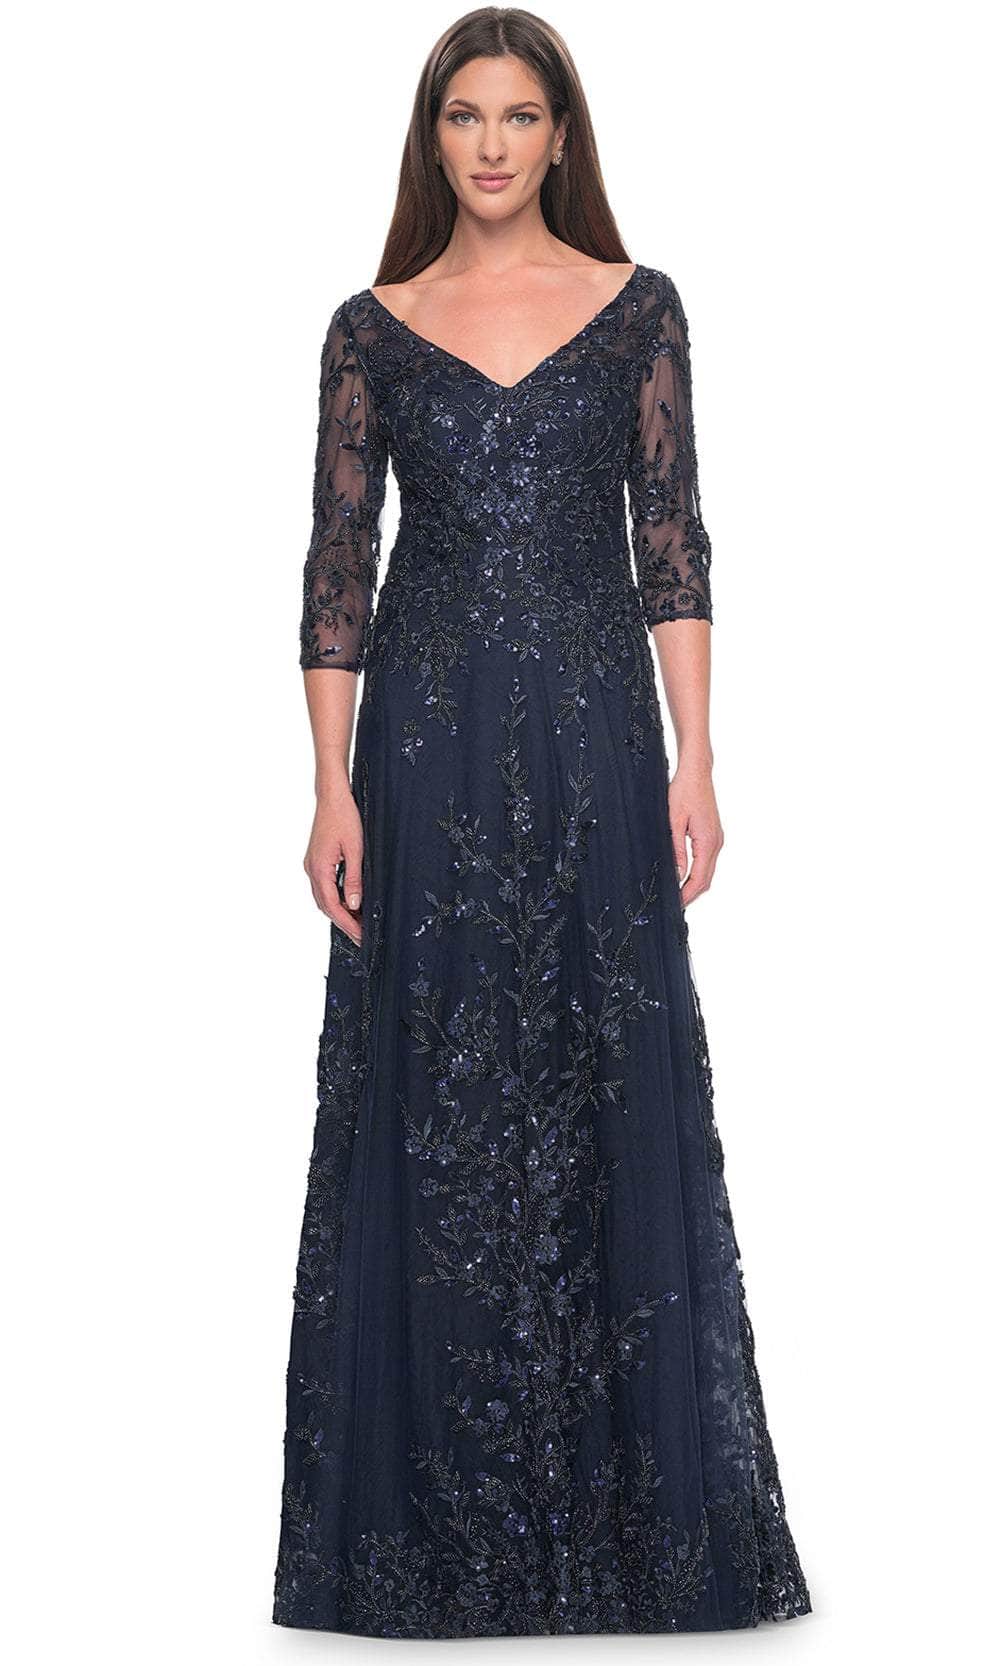 Image of La Femme 31719 - Lace Sequin Formal Dress